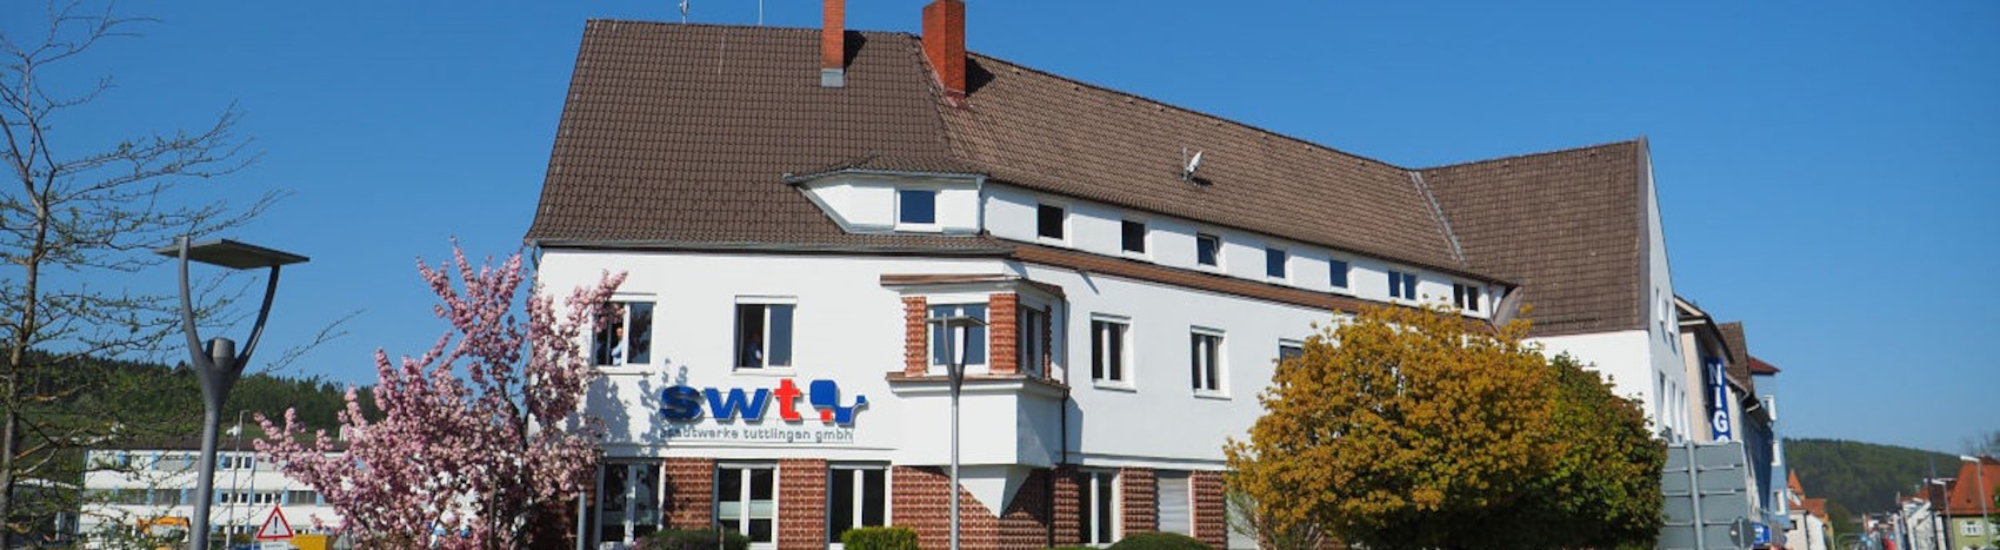 Stadtwerke Tuttlingen GmbH